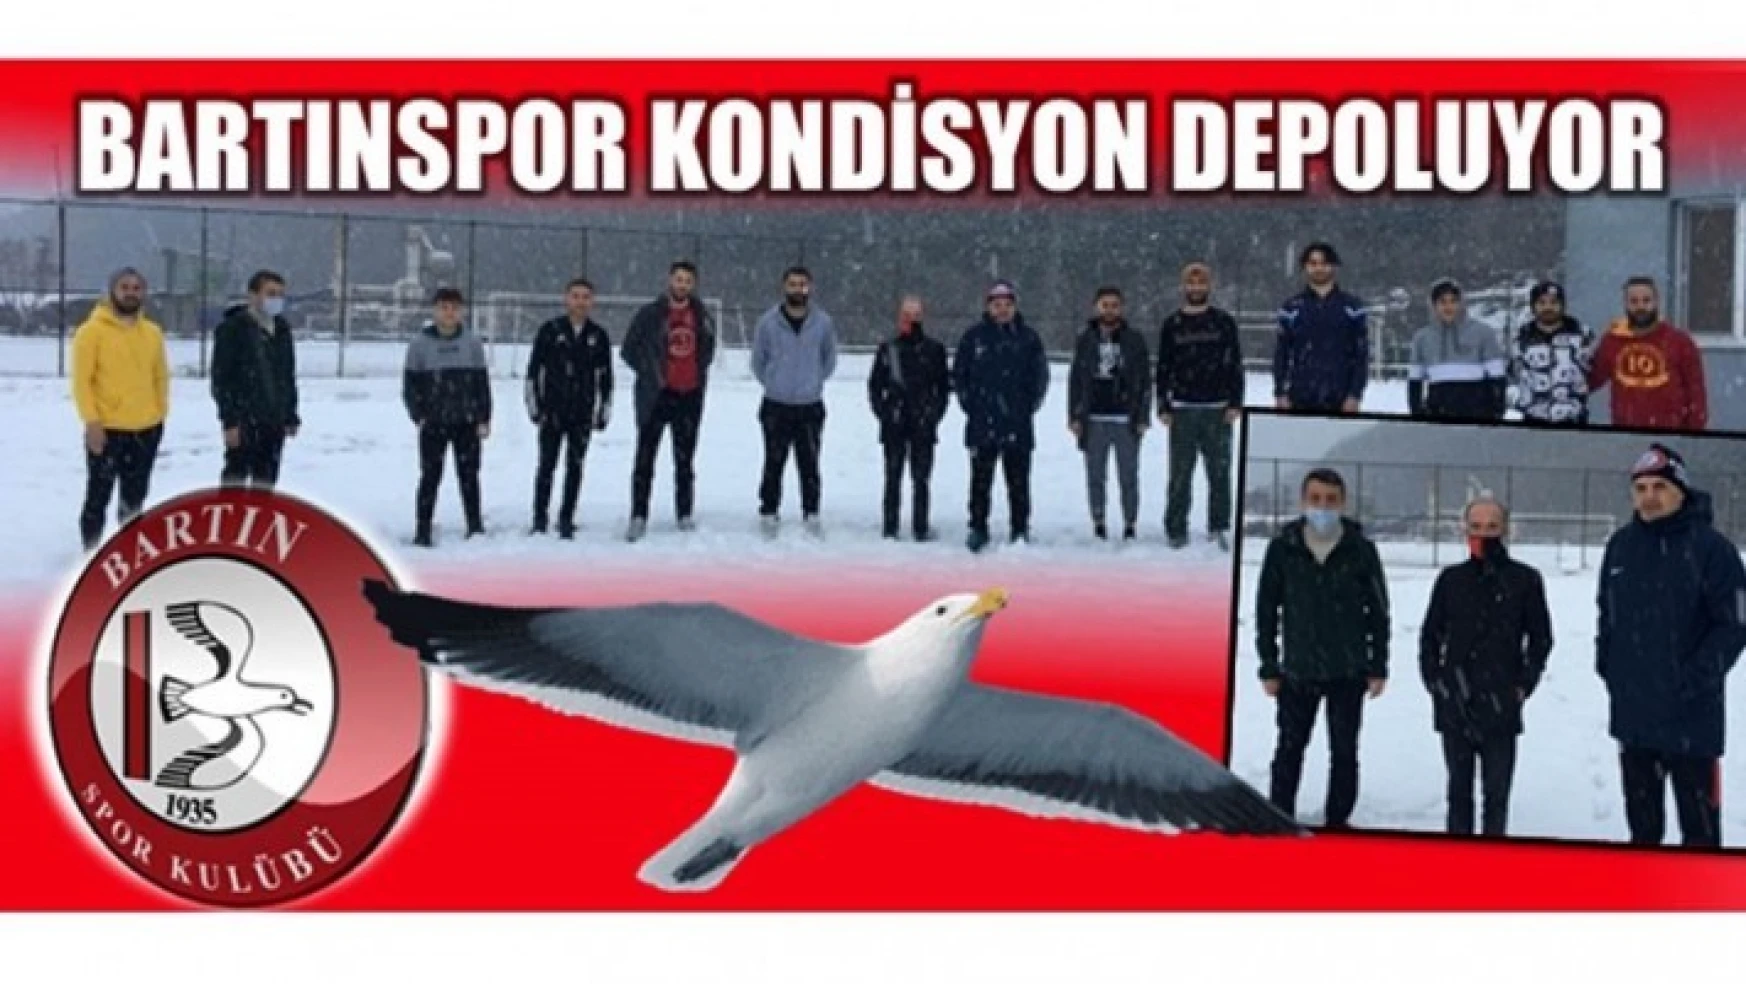 BARTINSPOR KONDİSYON DEPOLUYOR